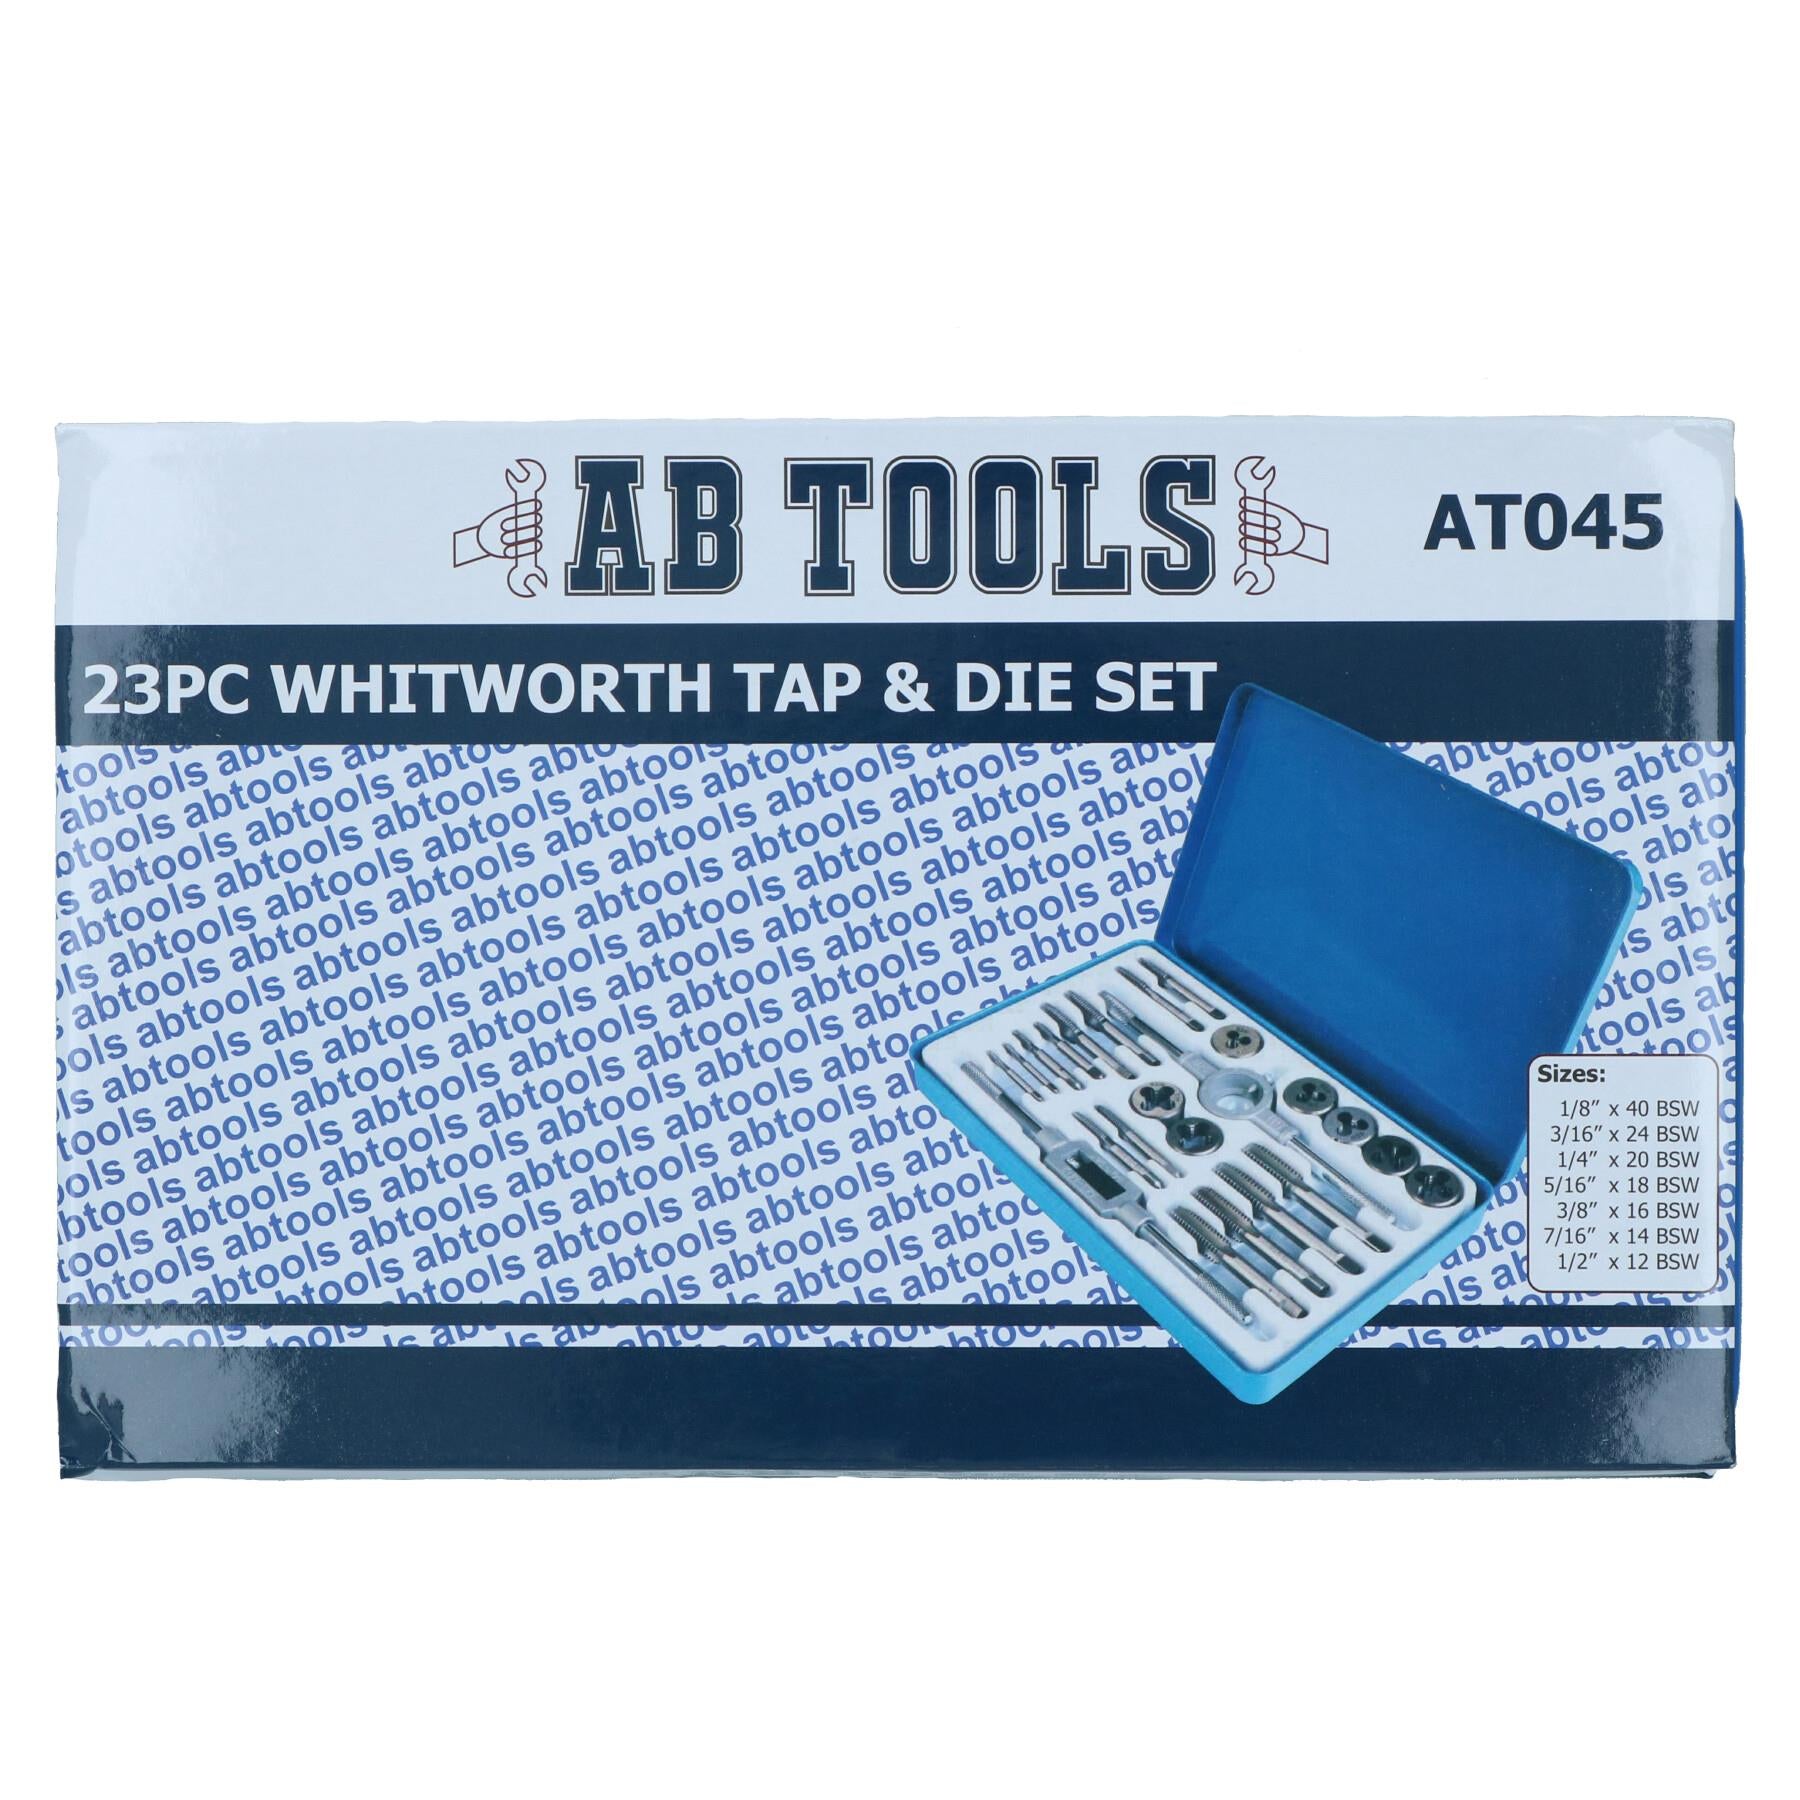 Whitworth Tap and Die Set BSW British Standard 23pc Rethreading Thread Repair